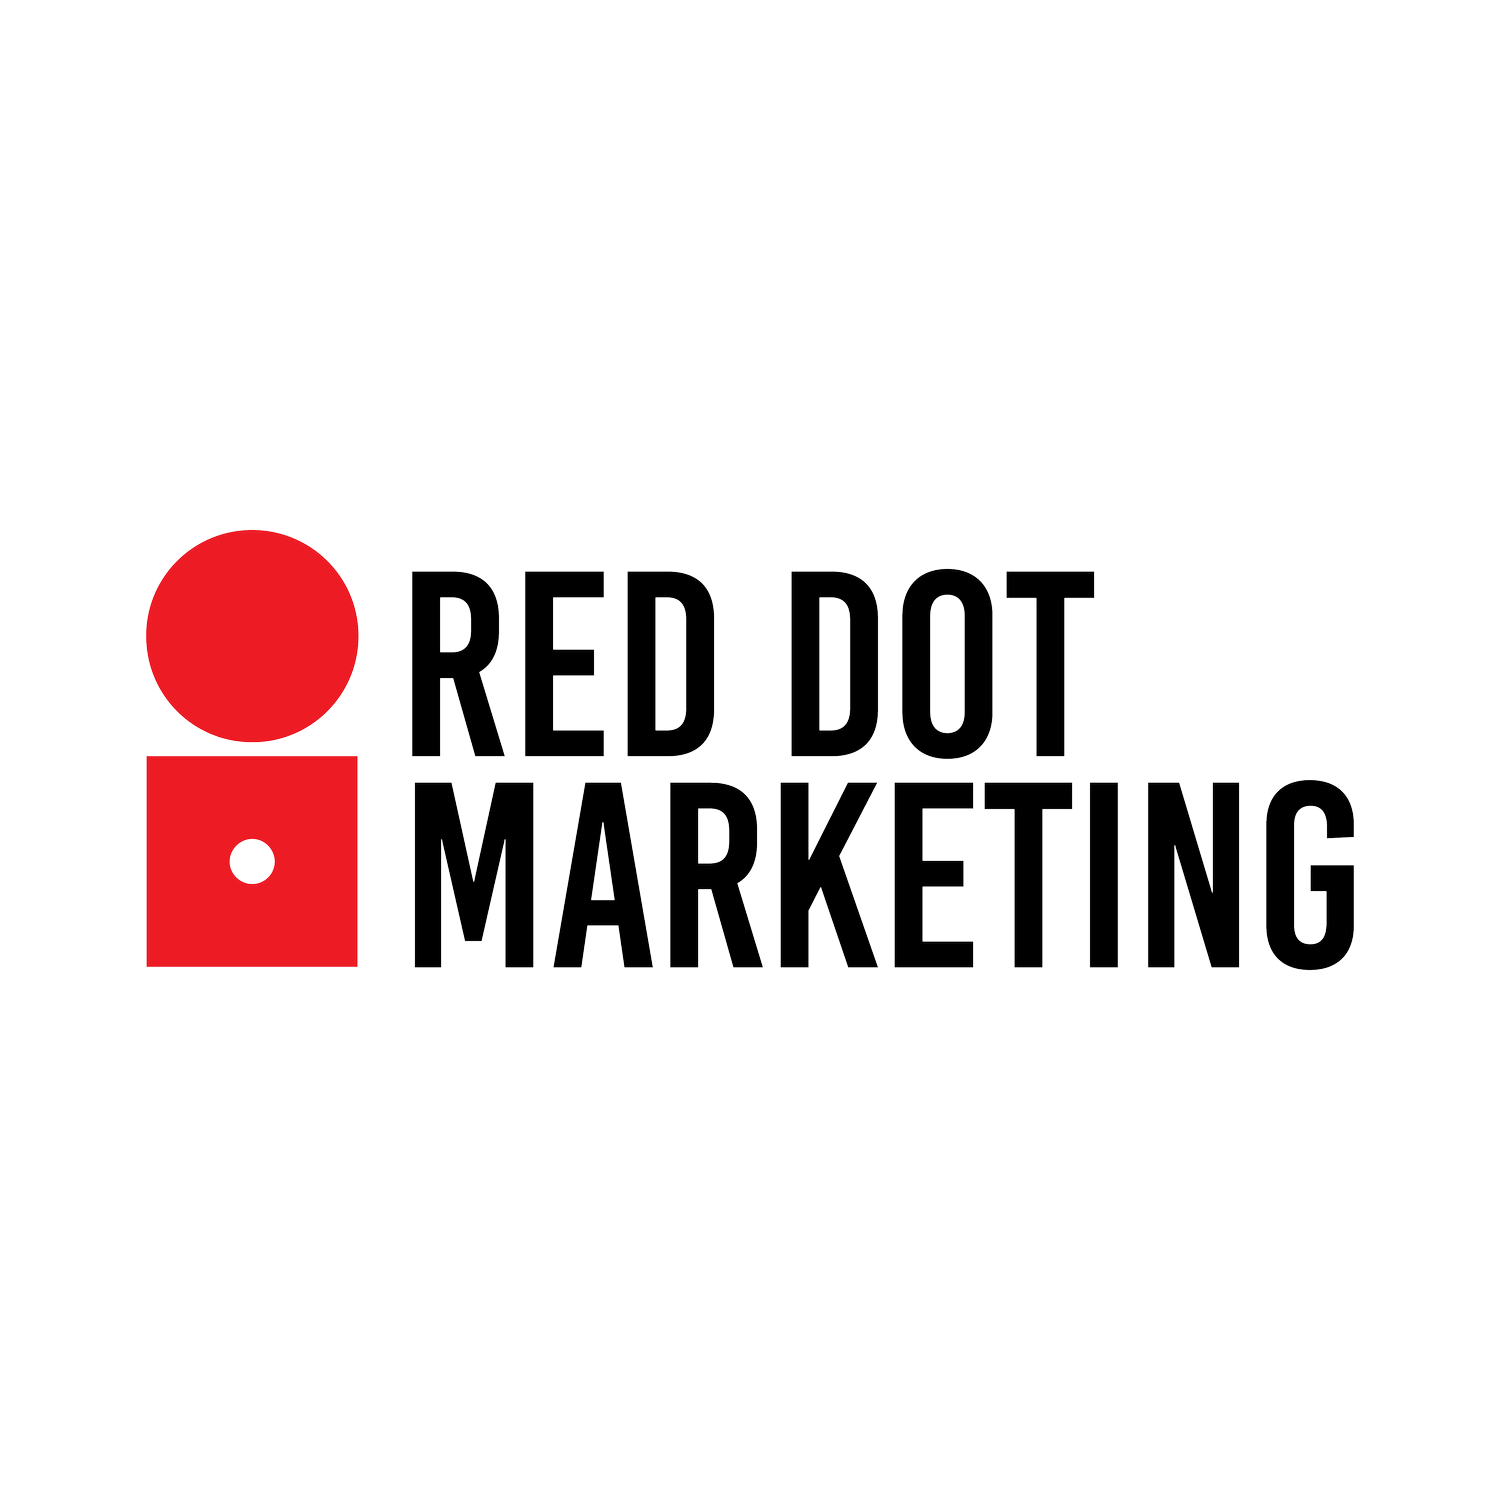 RED DOT MARKETING Dubai marketing agency